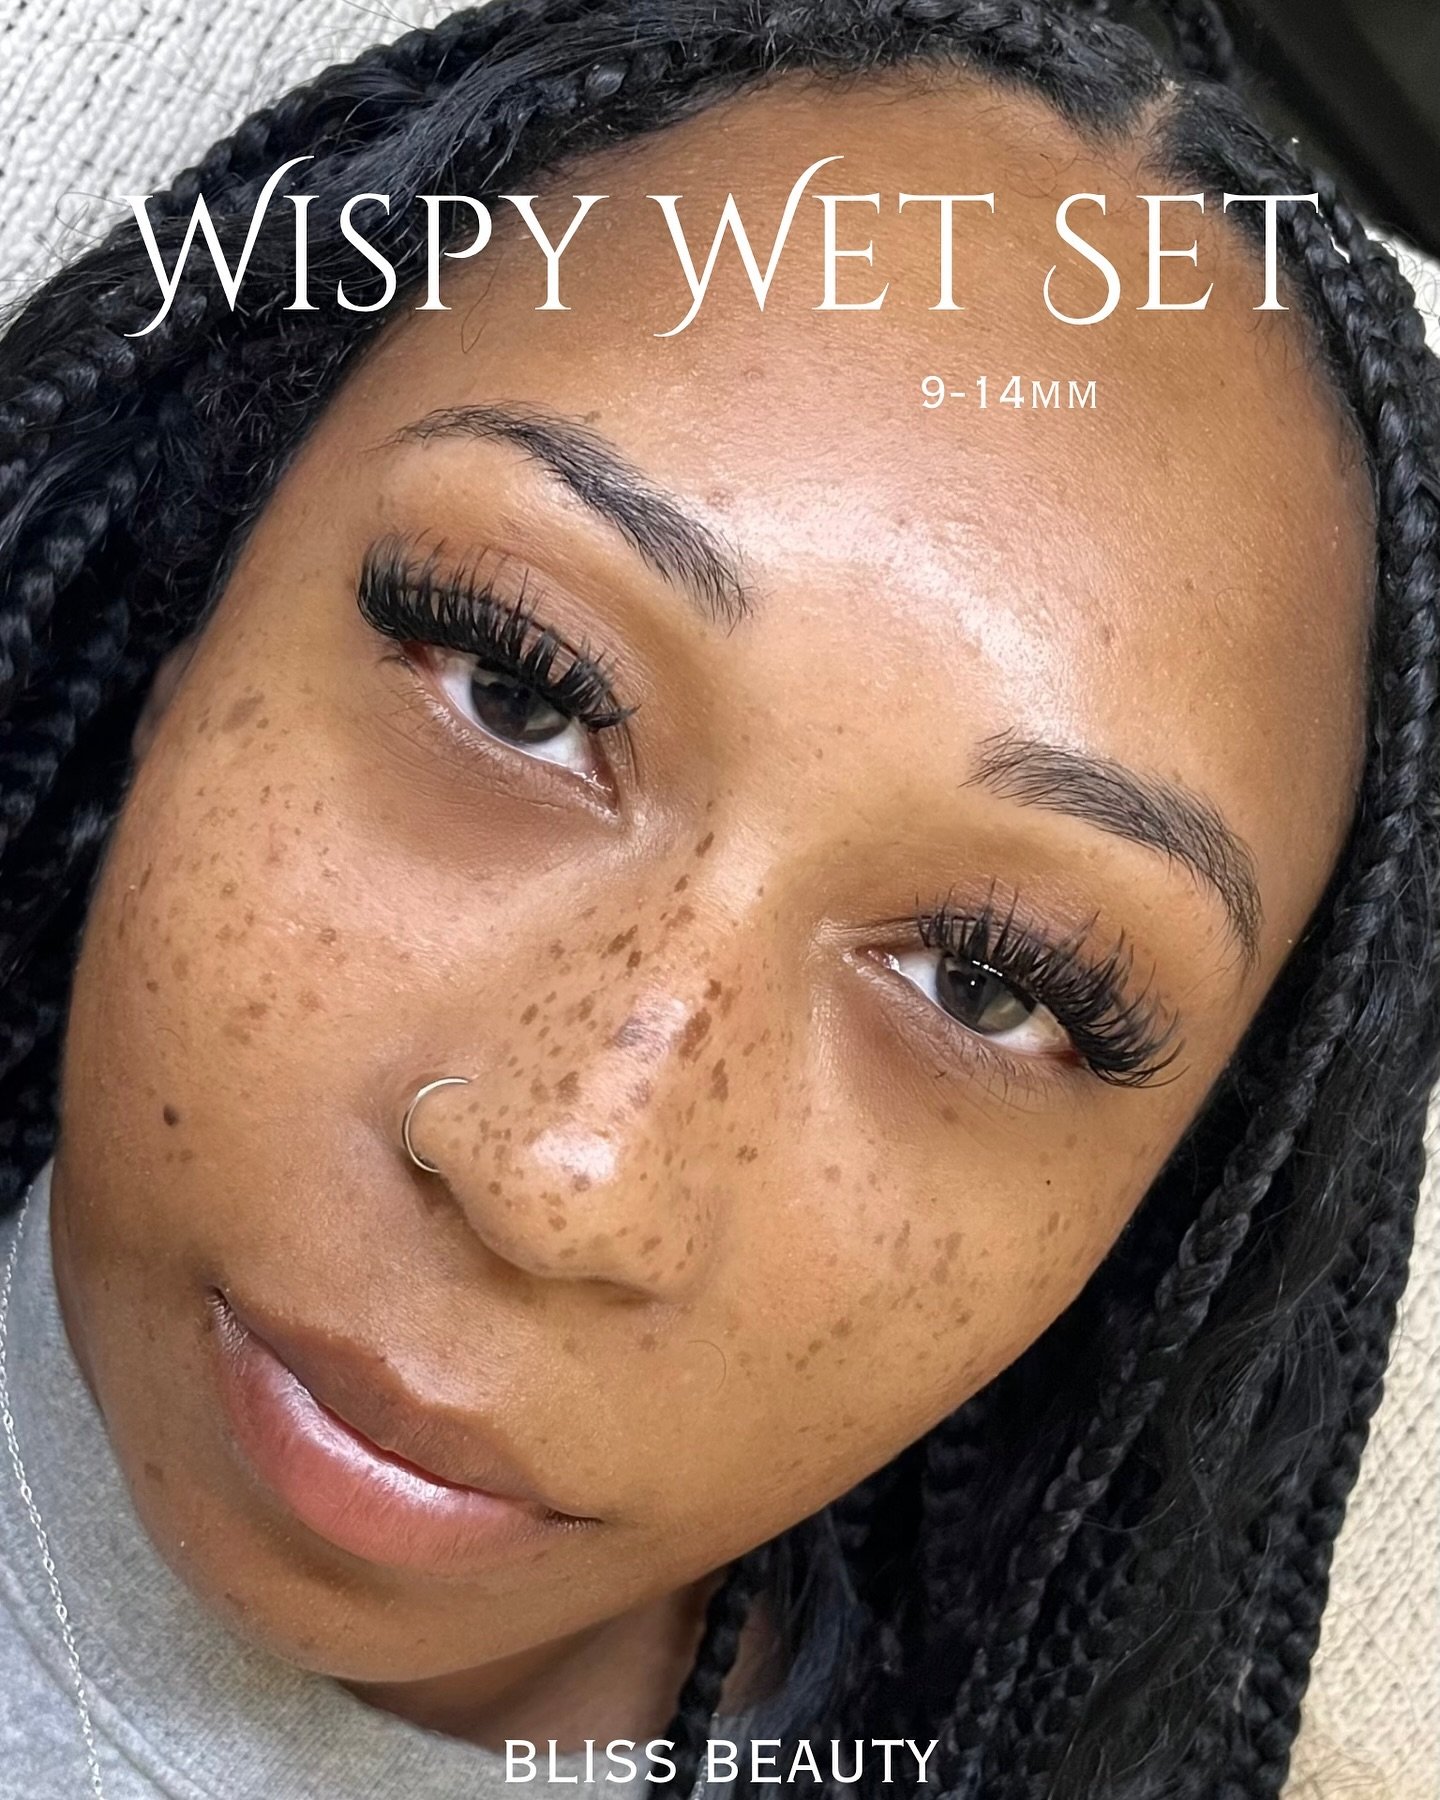 Wispy Wet Set ✨🤩

Ready to enhance your natural beauty? Book your appointment today at www.blissbeautycincy.com!

#cincinnatilashes #cincylashes #cincinnatilashextensions #cincinnatiesthetician